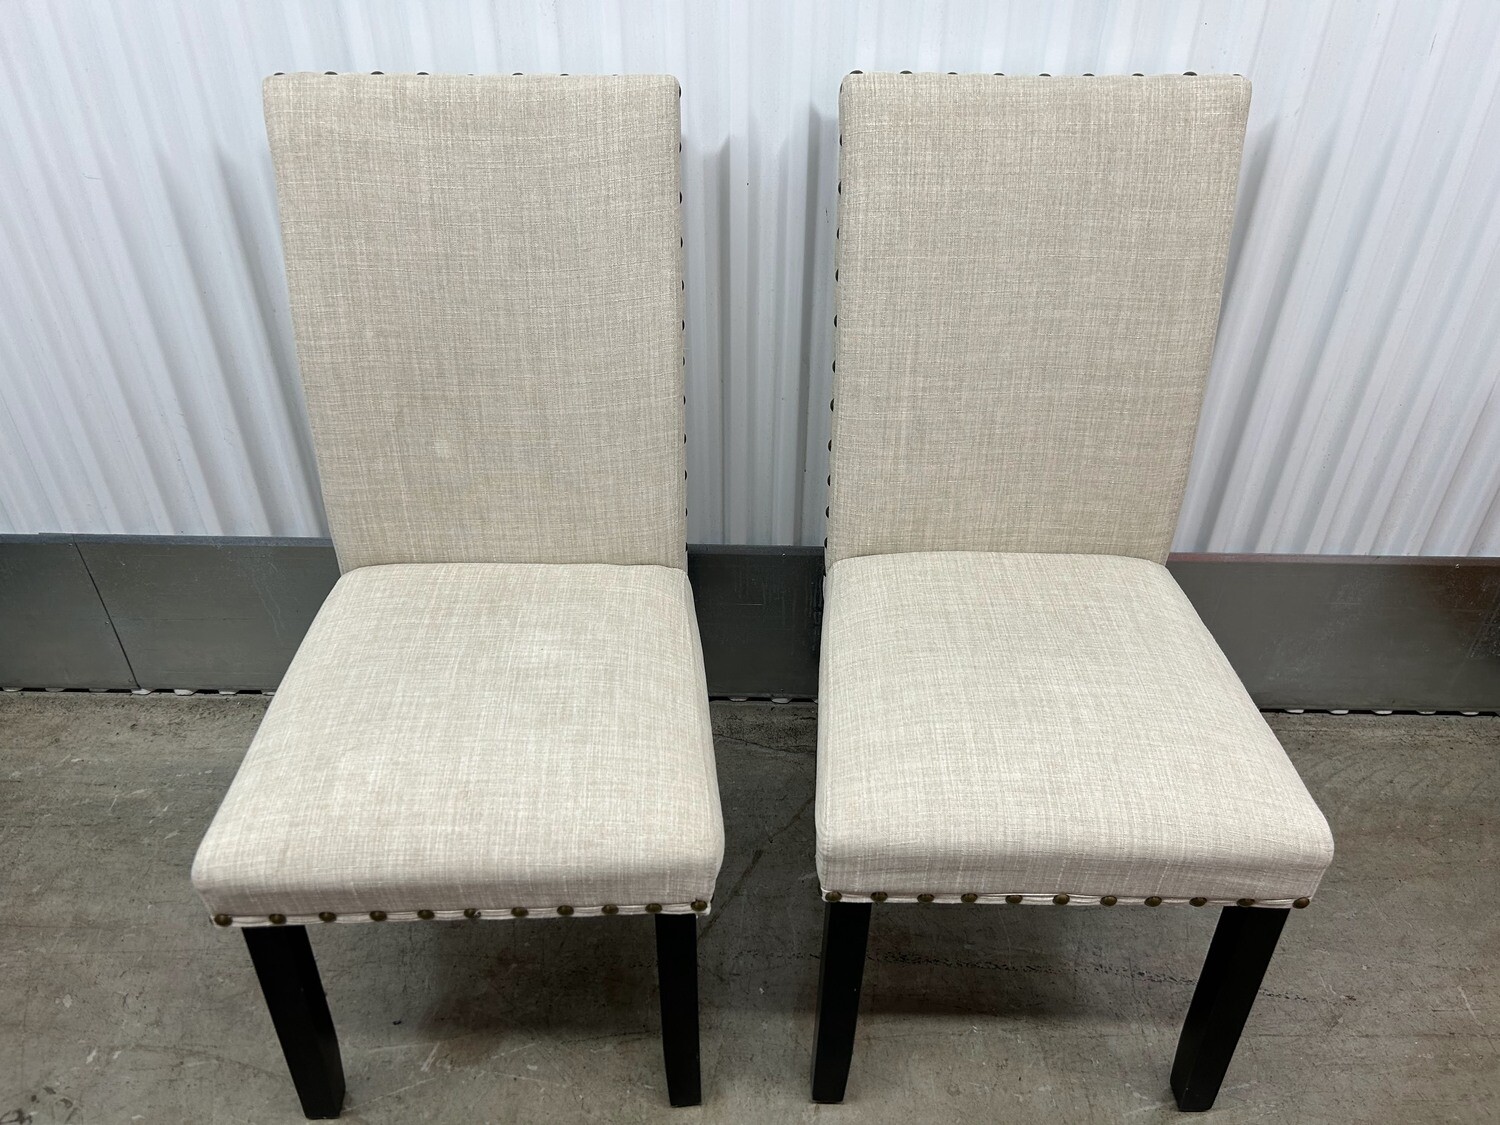 2 Dining Chairs, beige linen fabric w/ nailhead trim